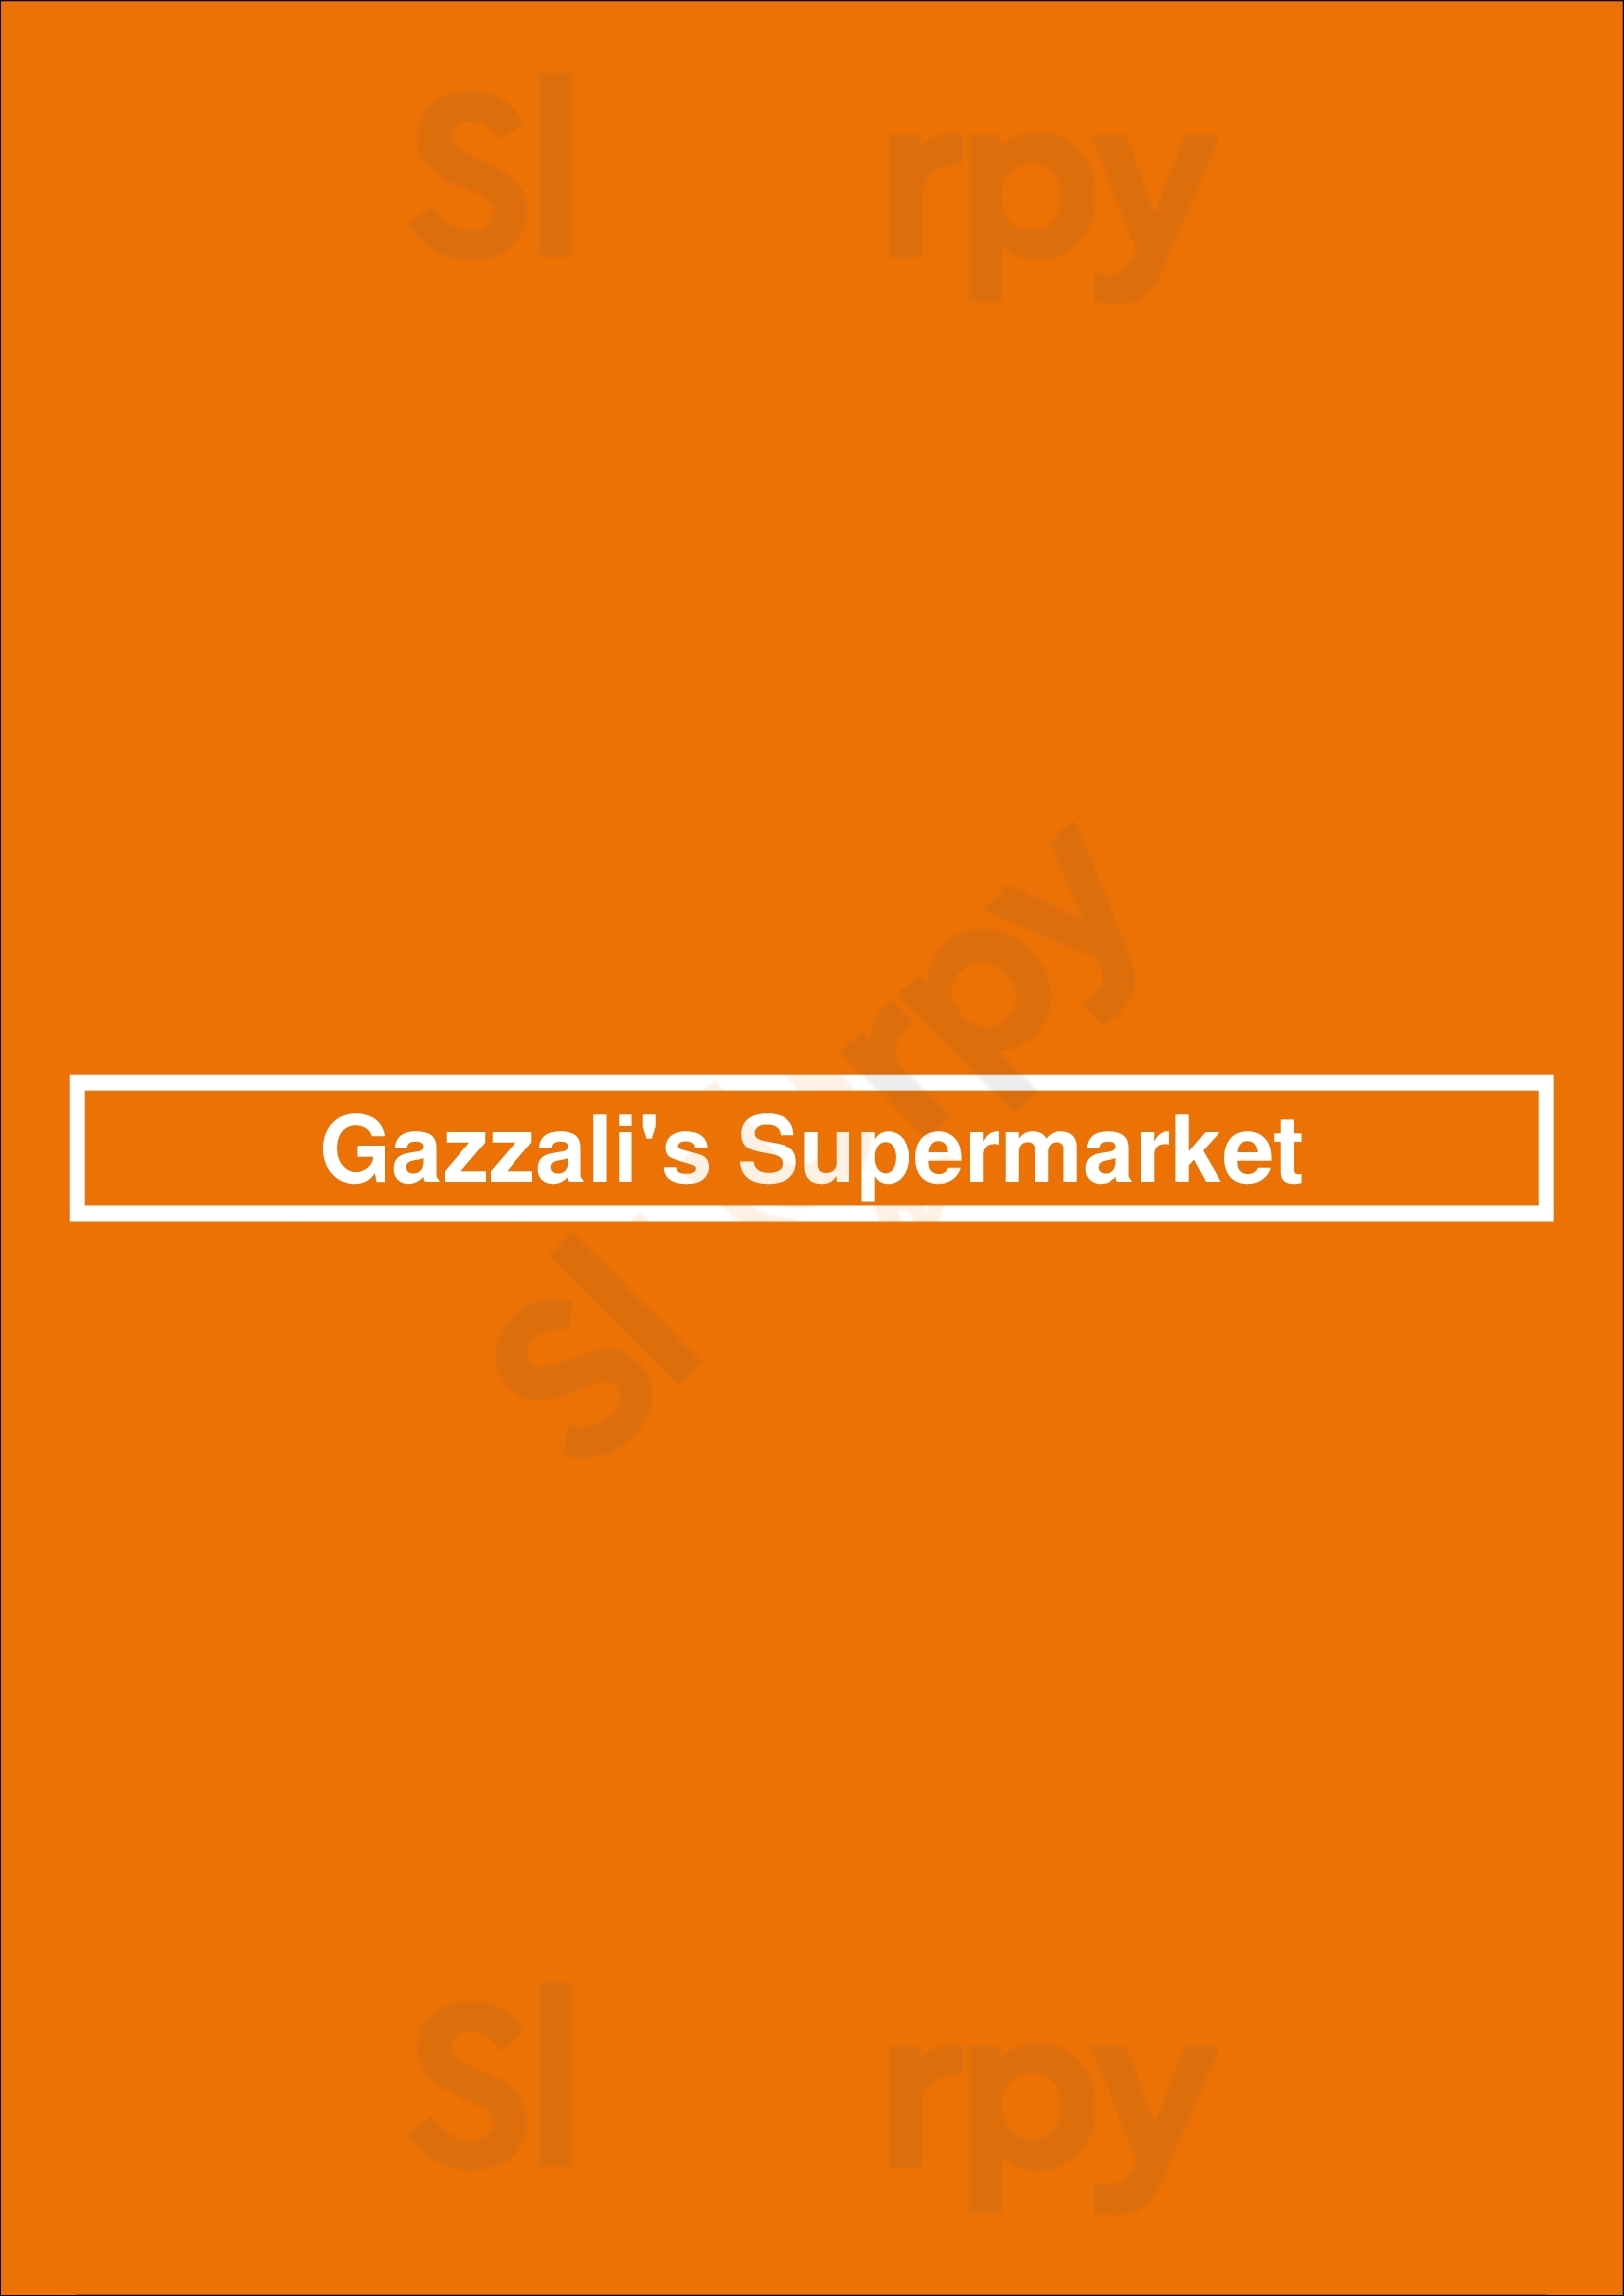 Gazzali's Supermarket Oakland Menu - 1